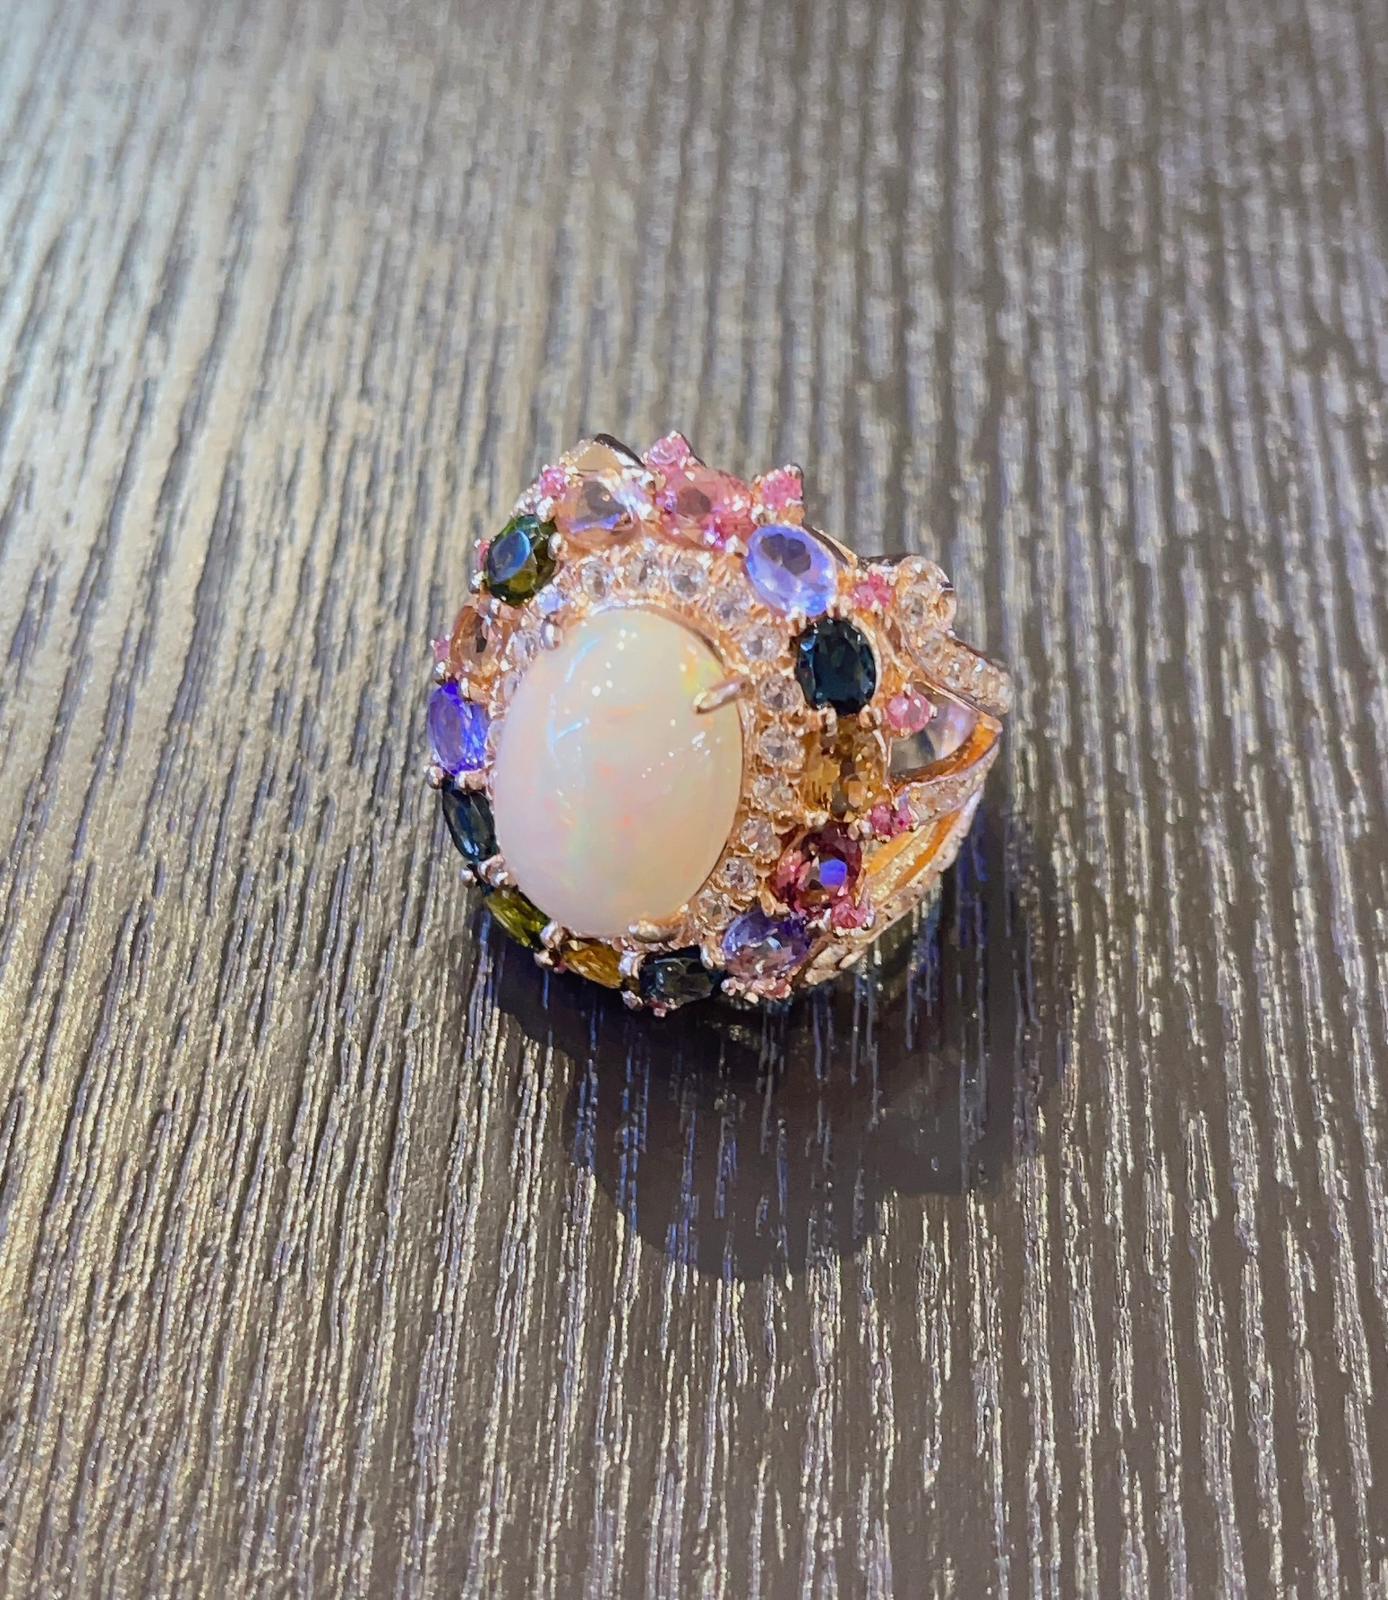 Brilliant Cut Bochic “Capri” Opal & Multi Color Sapphire Cocktail Ring Set 22k Gold & Silver For Sale